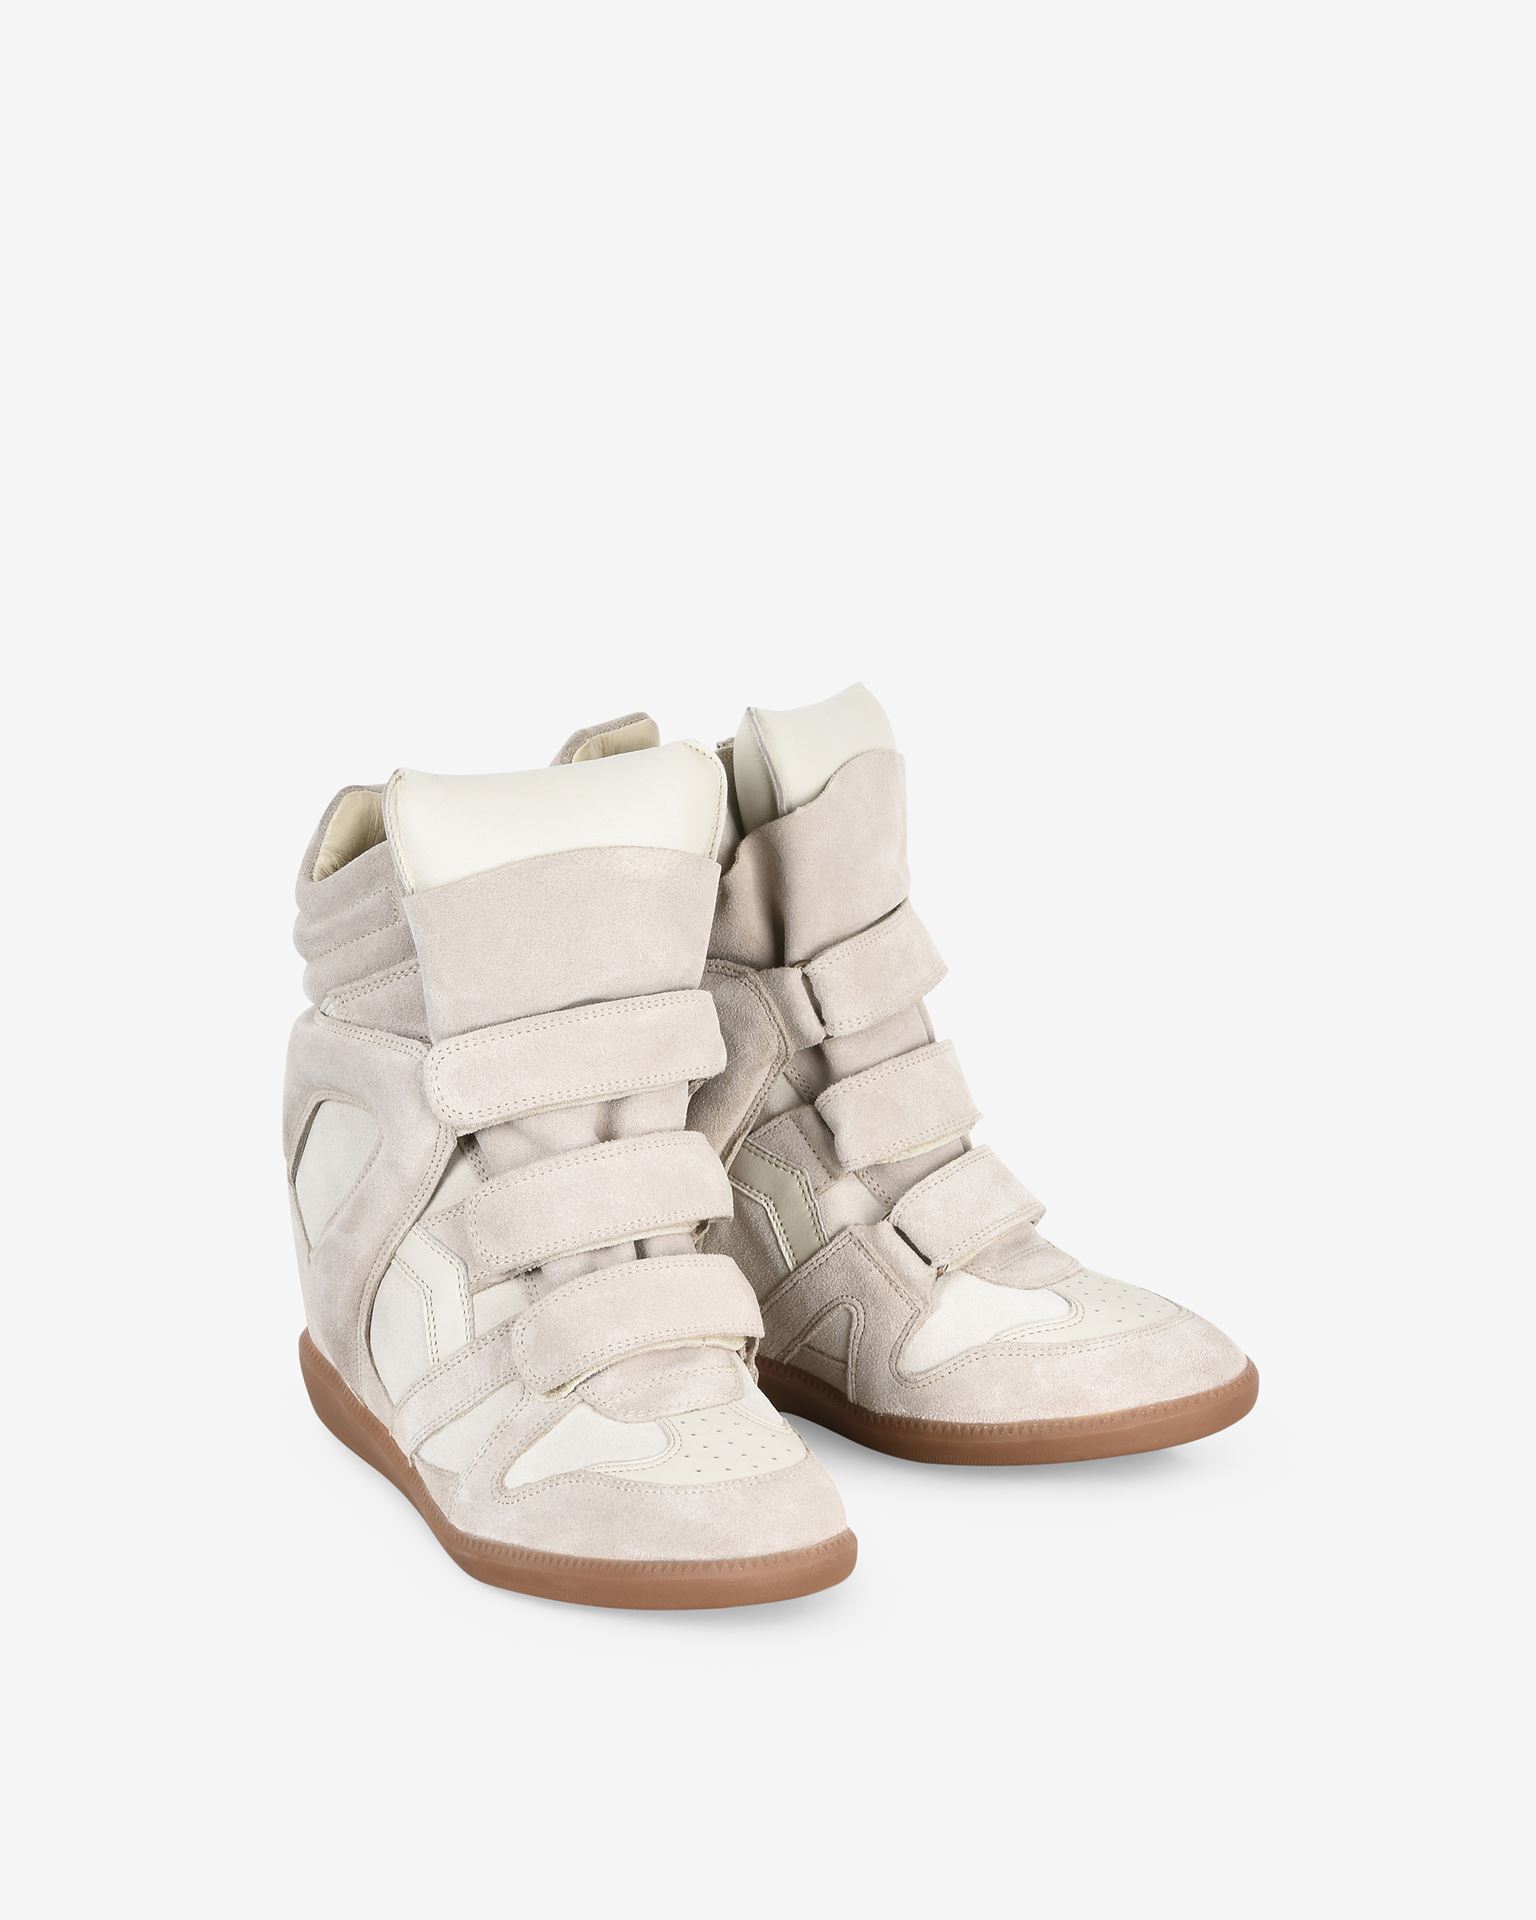 Isabel Marant, Bekett Suede Sneakers - Women - White